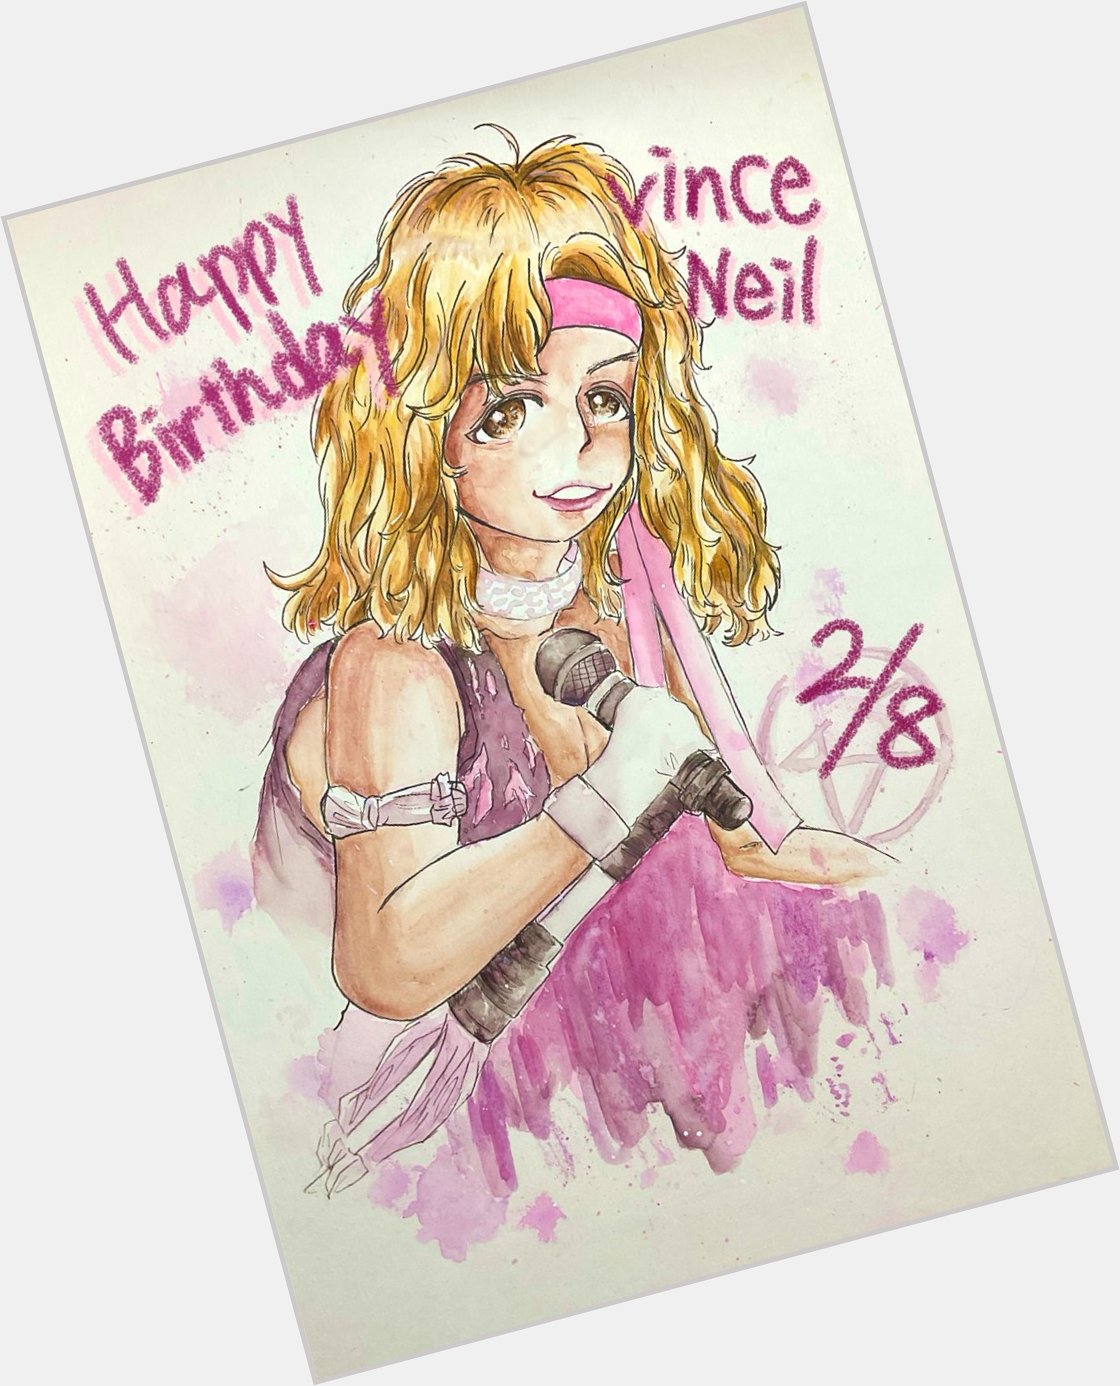 Happy birthday Vince Neil                                                          ( )  